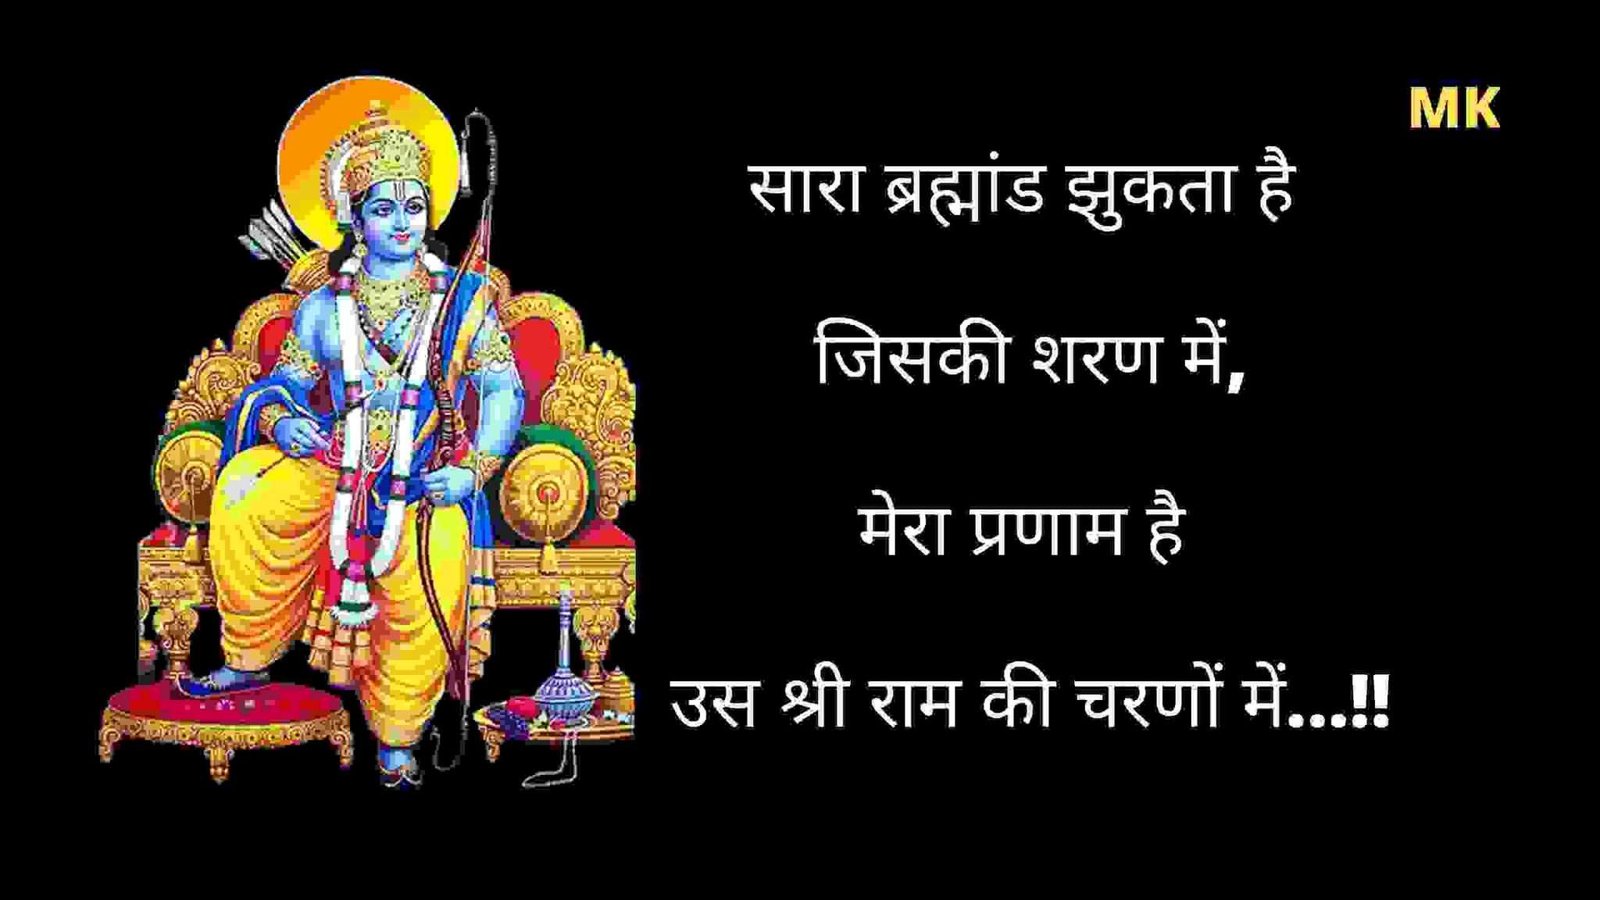 Kattar hindu Jay Shri Ram Status in Hindi with images by multi-knowledge.com